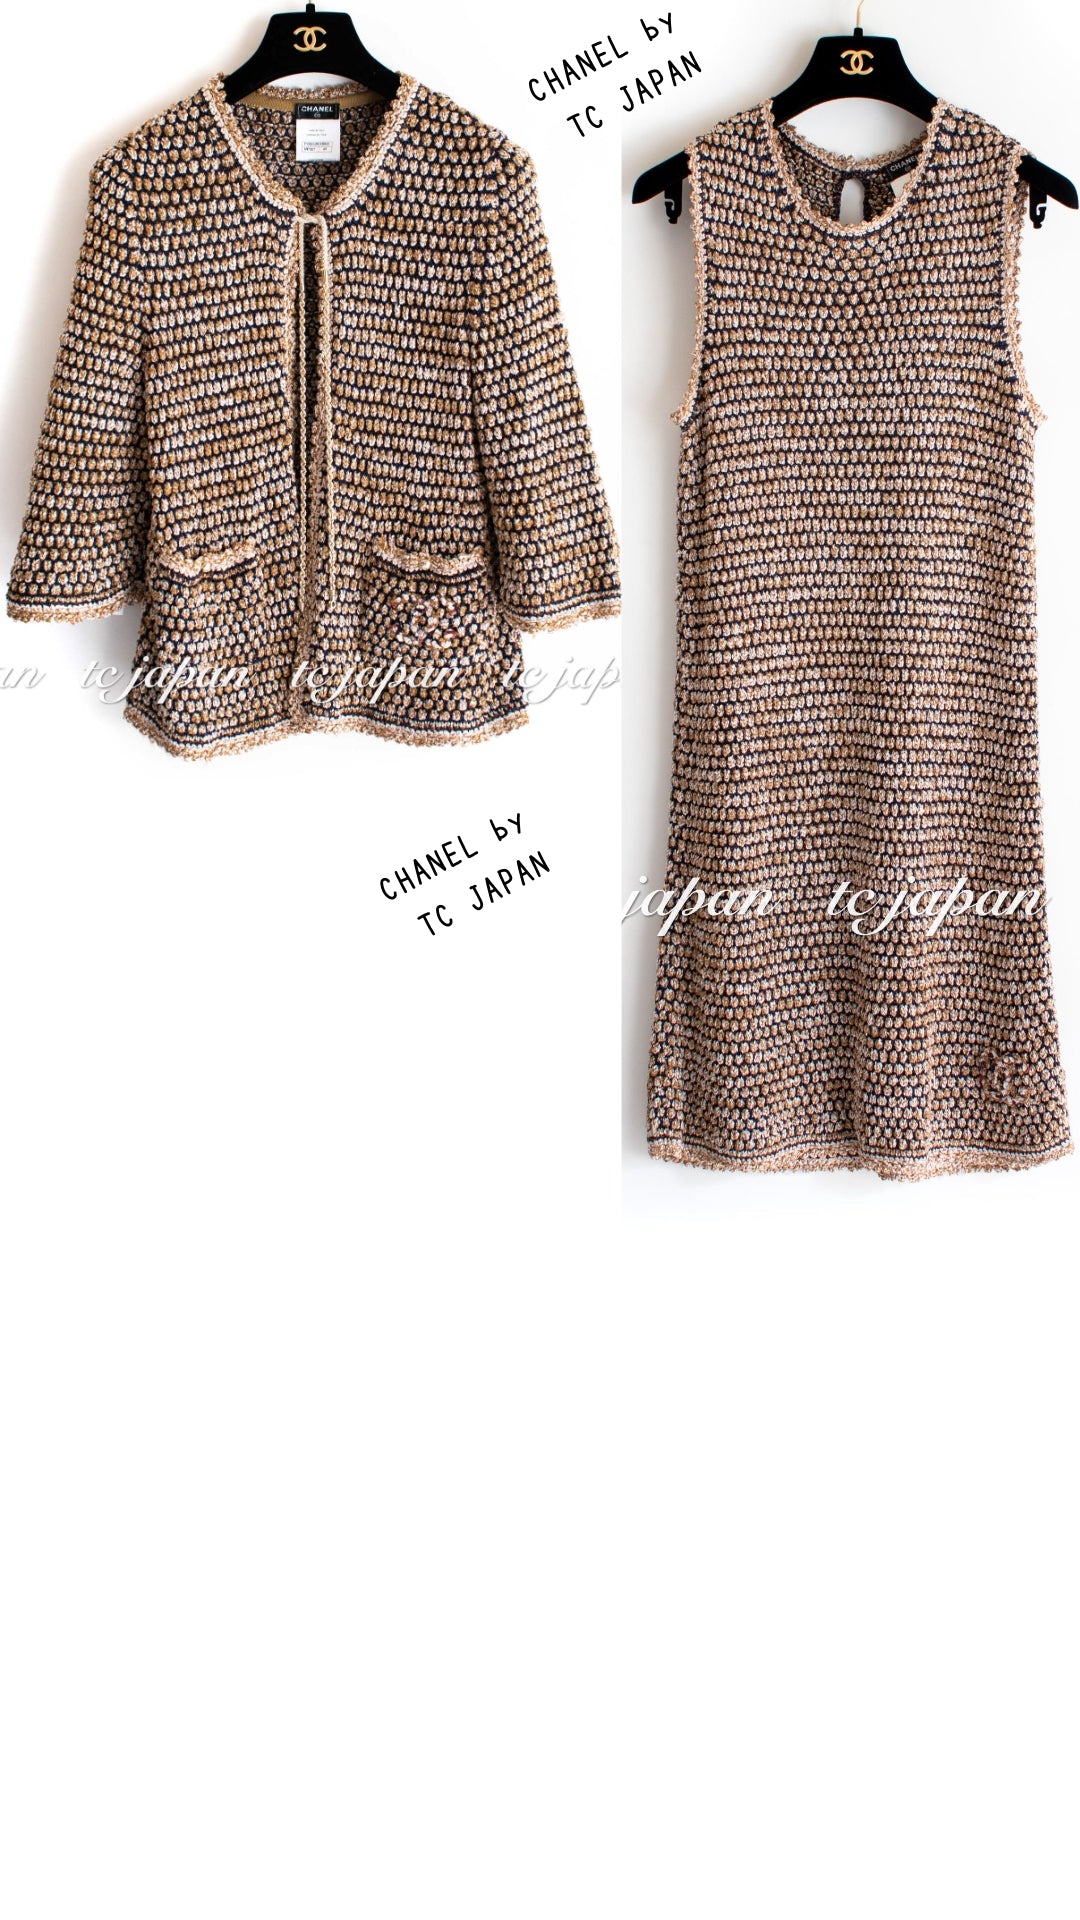 CHANEL 11S Champagne Gold Navy Knit Tops Skirt Cardigan Dress 36 38 40 シャネル シャンパンゴールド・女優のカーディガン・トップス・スカート・ワンピース 即発 - TC JAPAN